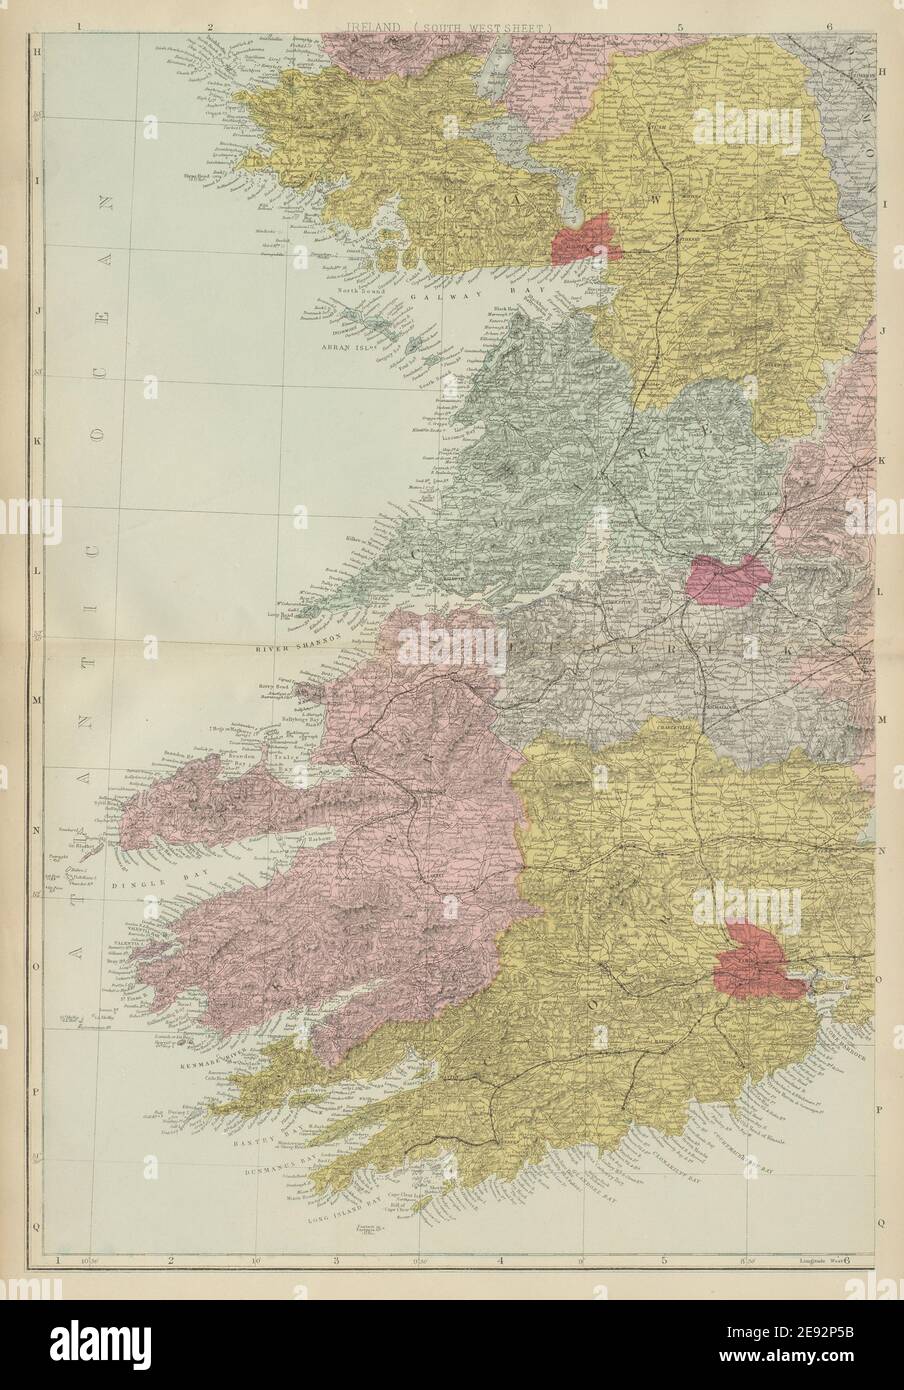 IRLANDA (suroeste) Munster Cork Kerry Clare Limerick GW BACON 1885 mapa antiguo Foto de stock